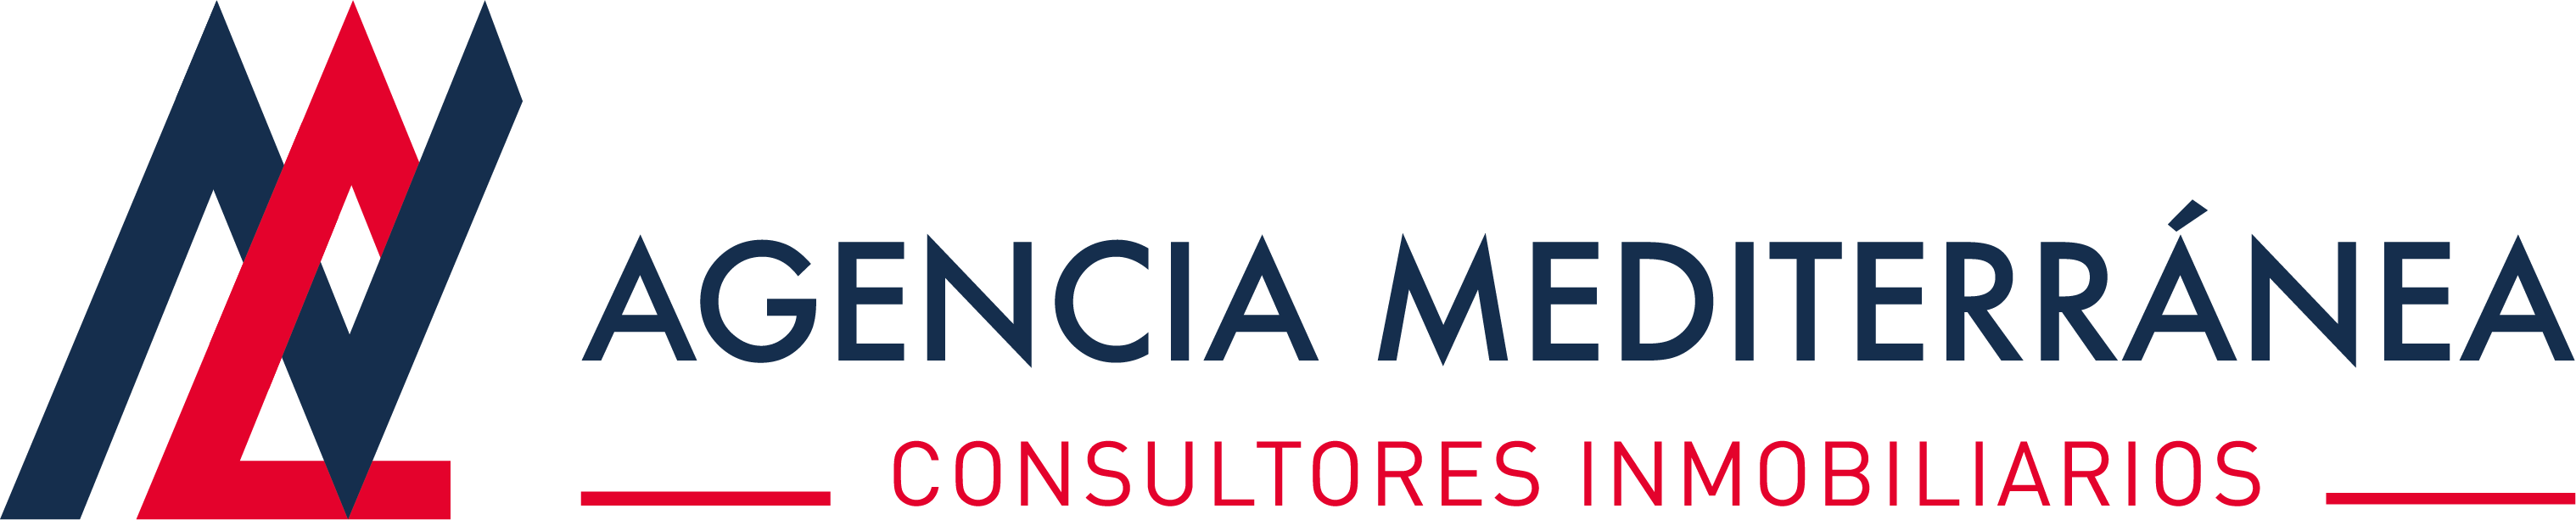 Mediterranea Agency